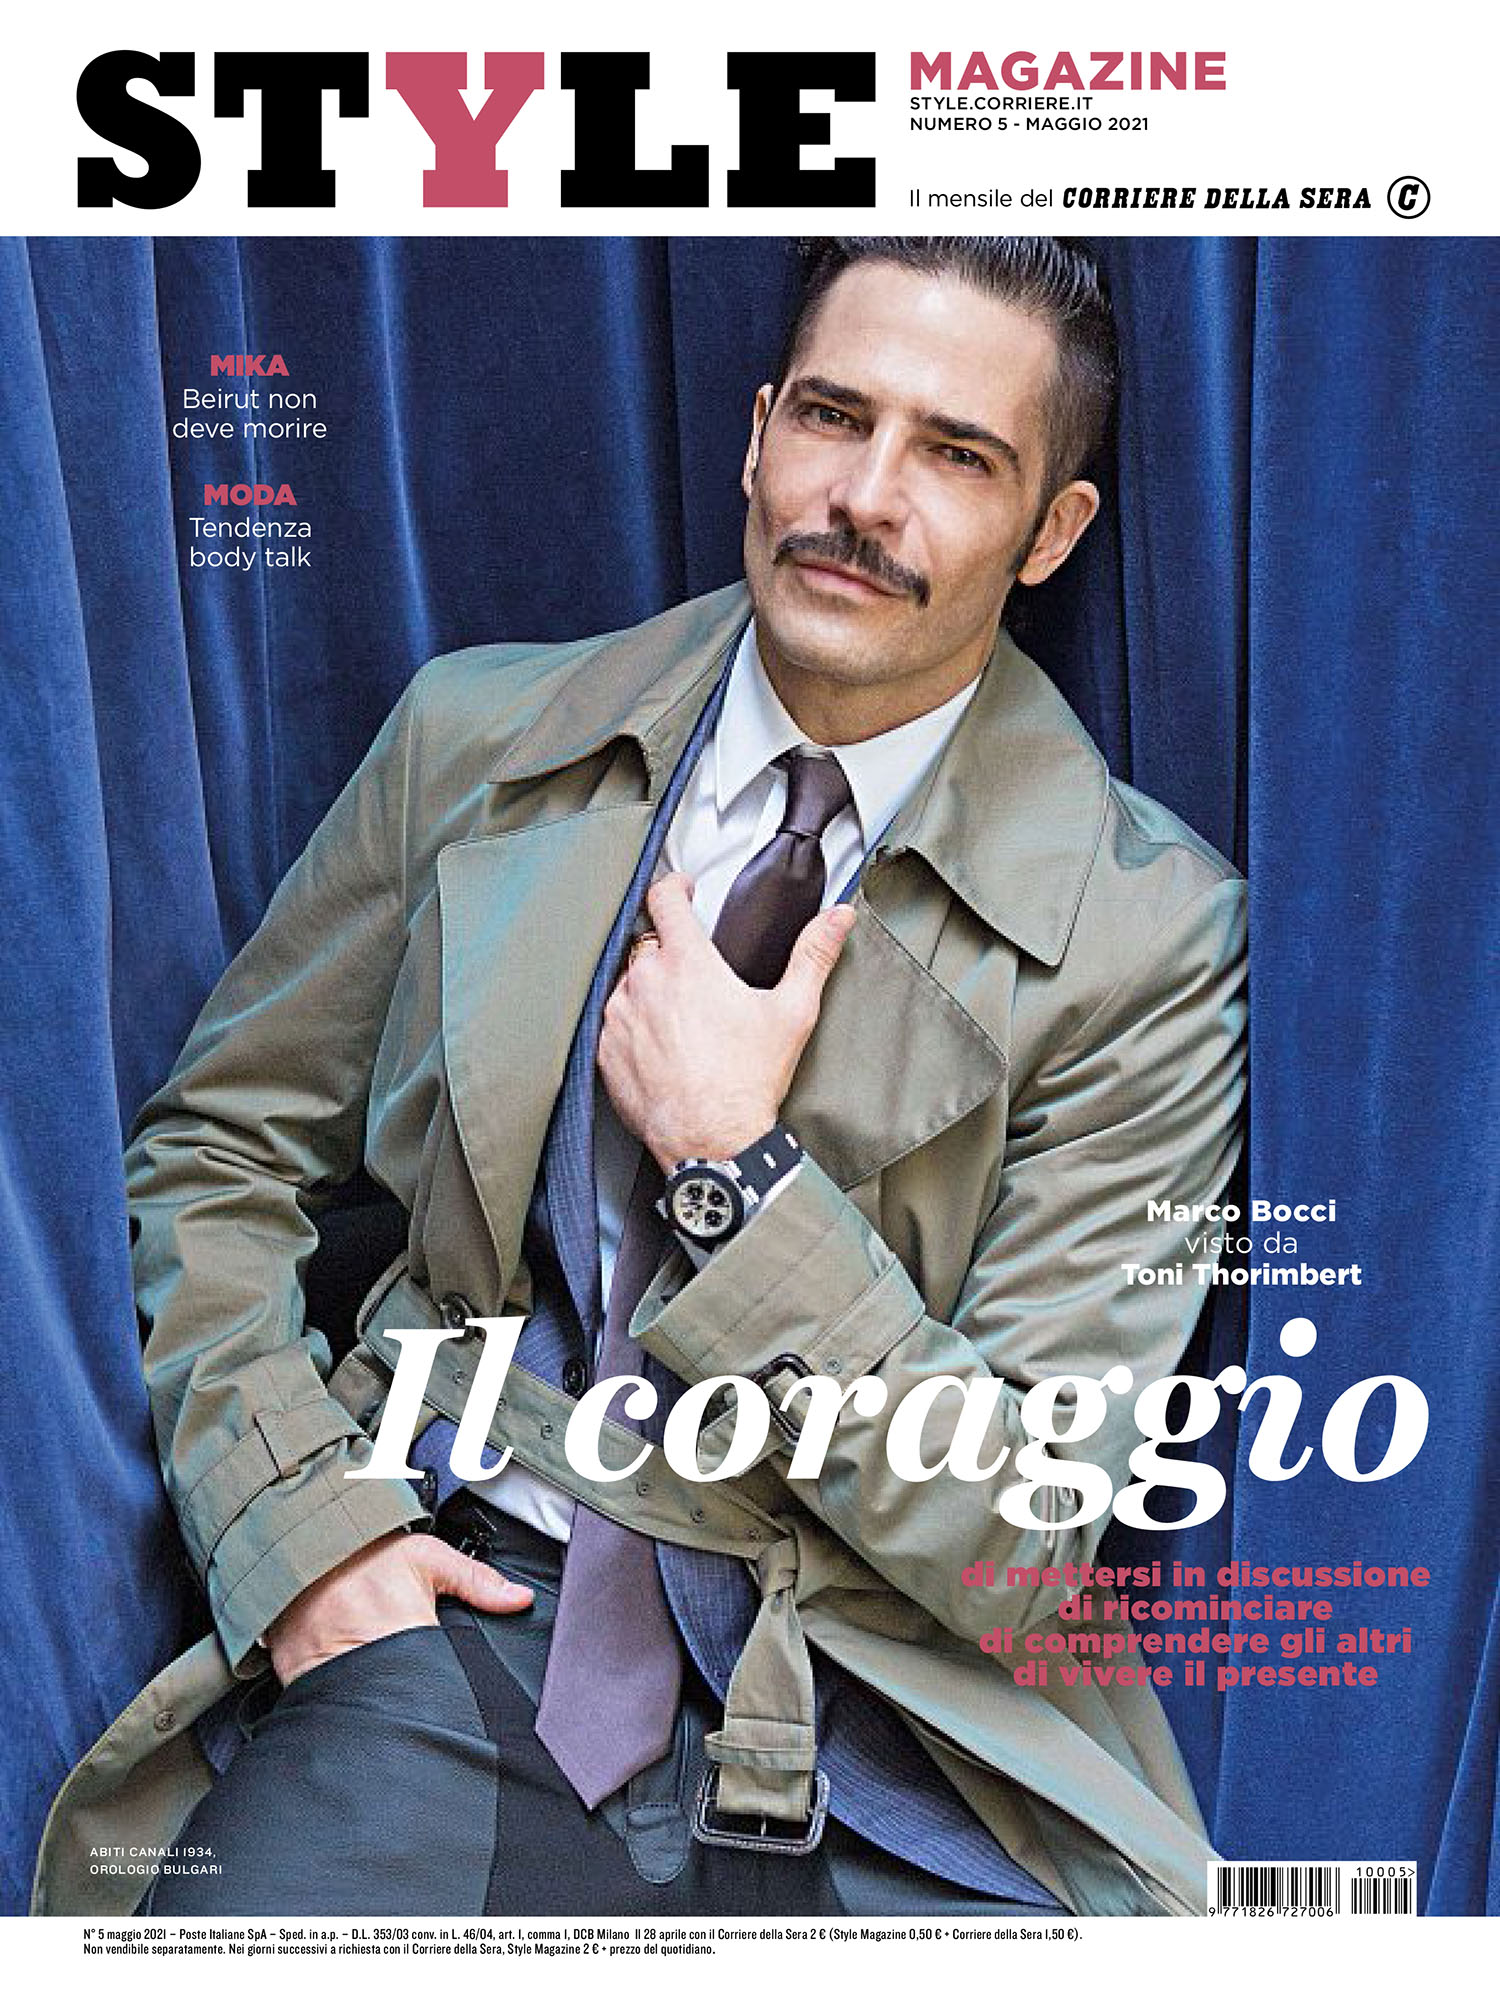 Marco Bocci covers Corriere della Sera Style May 2021 by Toni Thorimbert